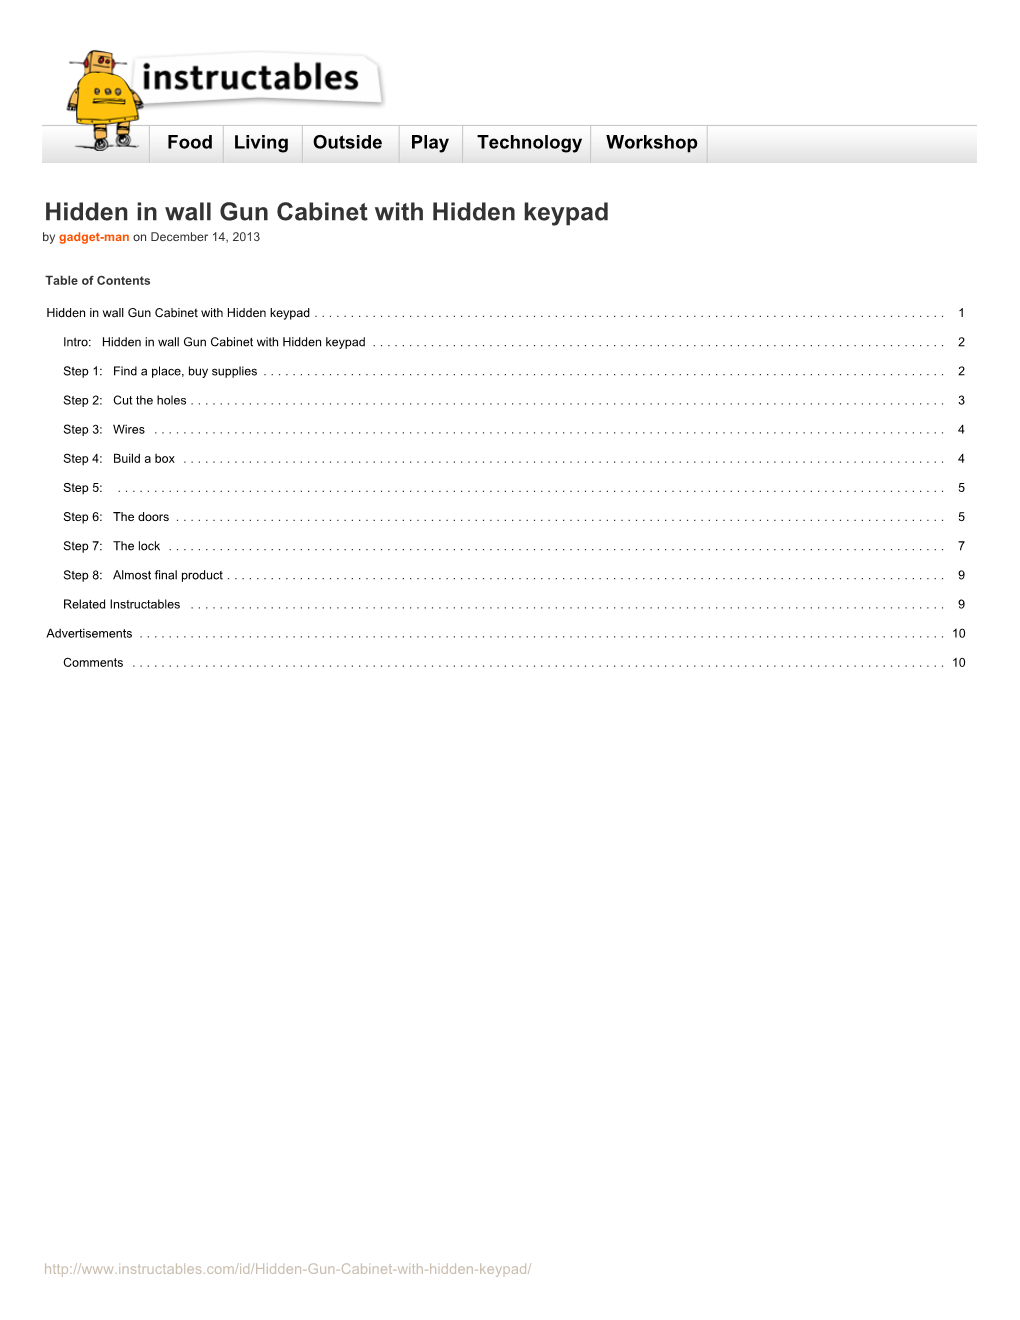 Hidden in Wall Gun Cabinet with Hidden Keypad by Gadget-Man on December 14, 2013